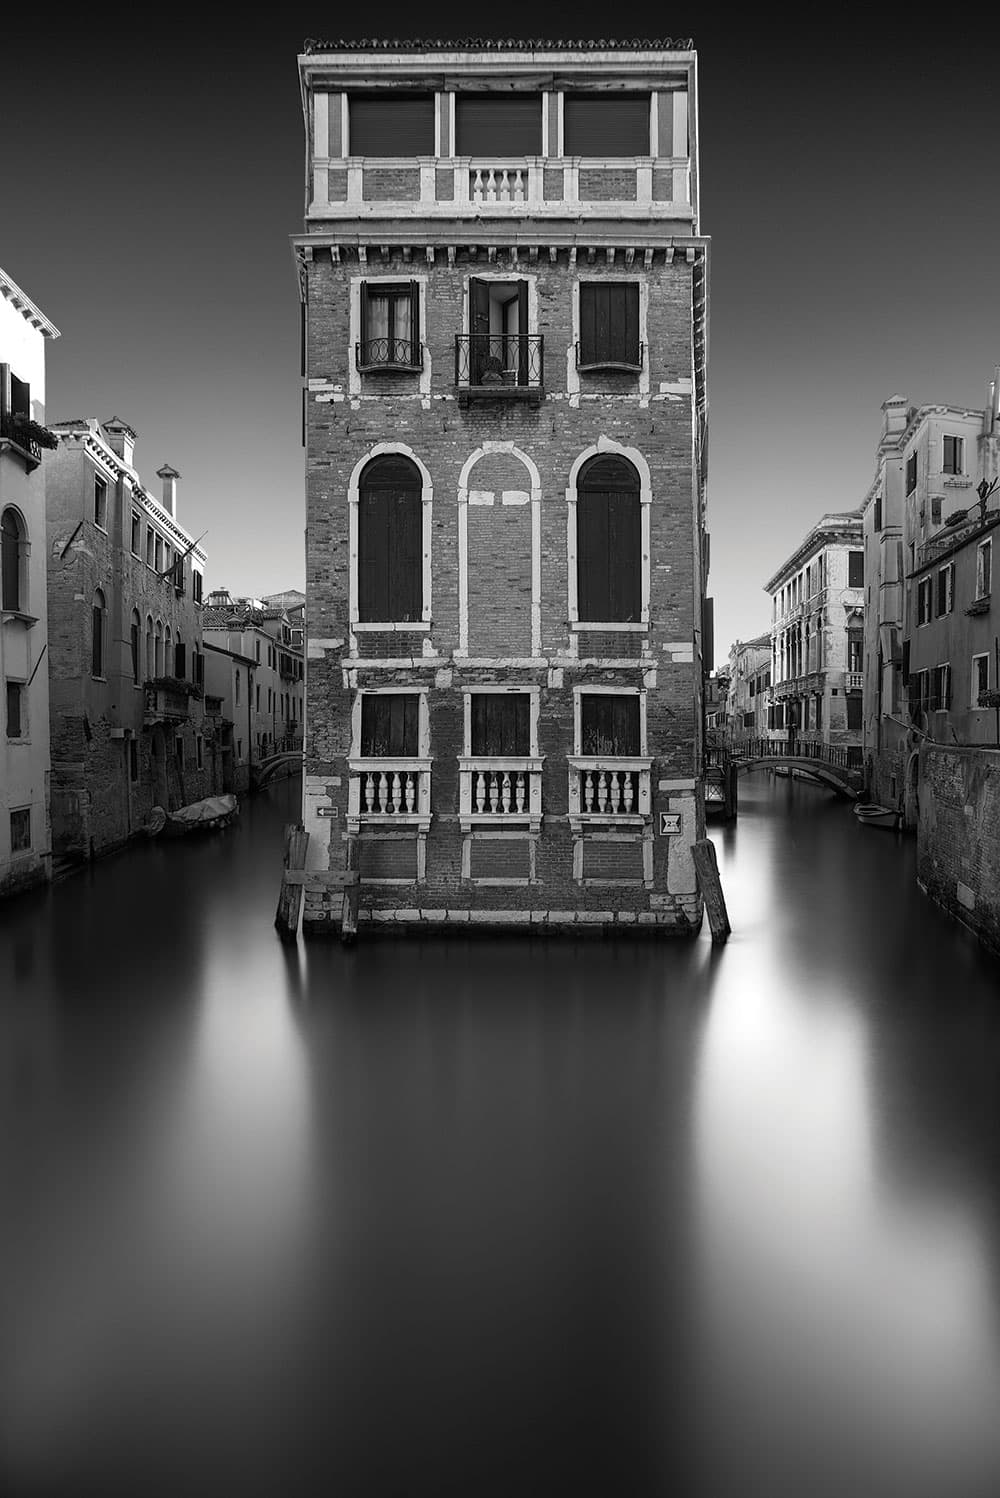 Monochrome house in Venice - Tony Sellen